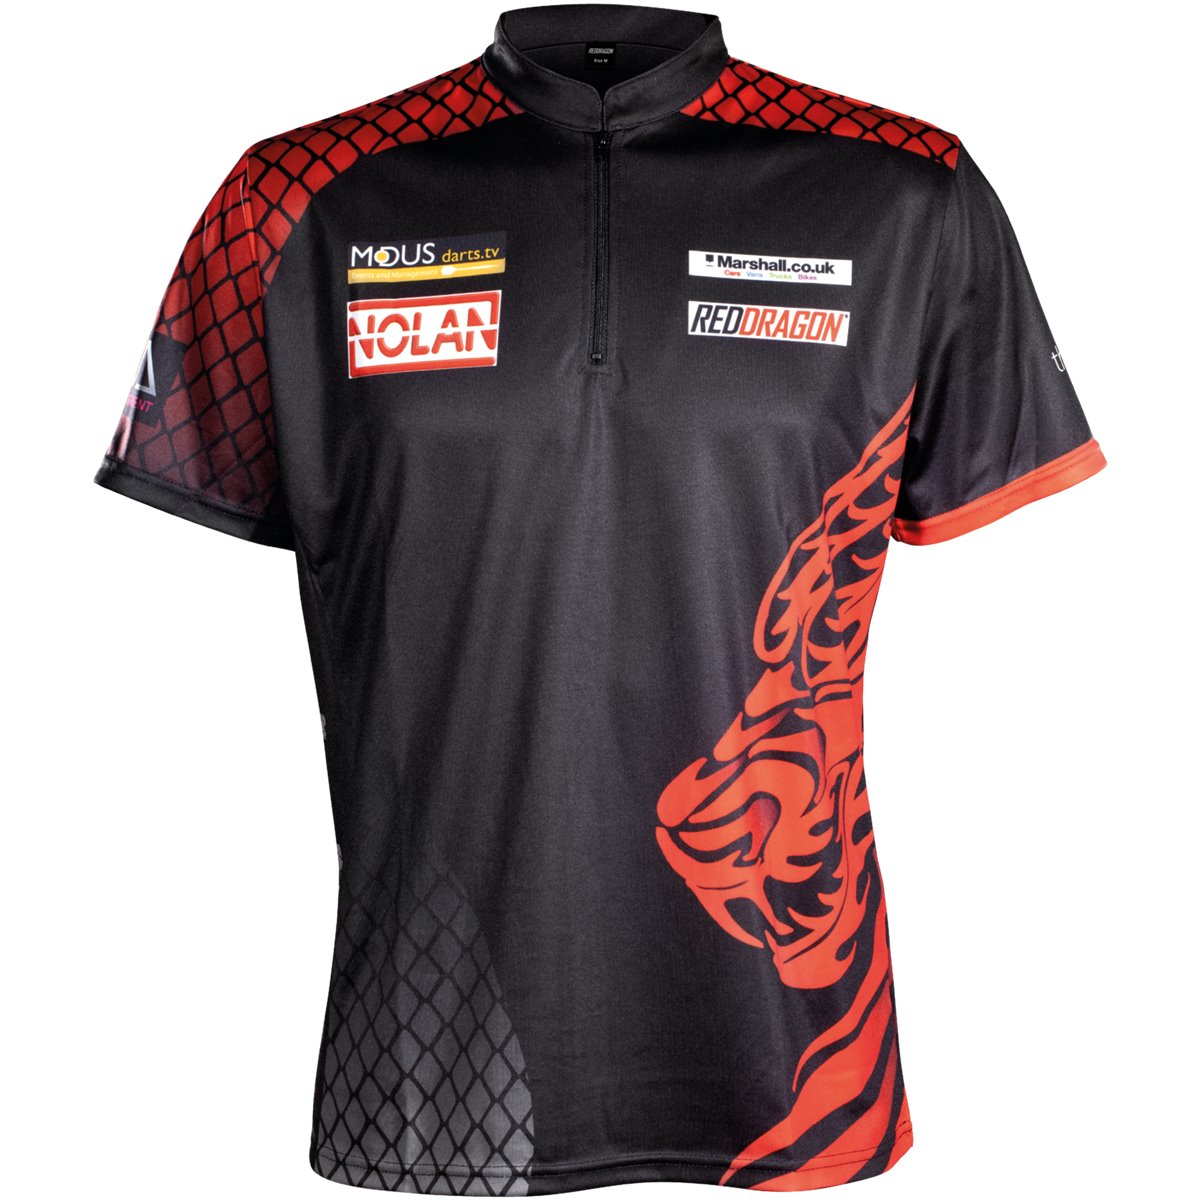 Reddragon Jonny Clayton Tour Polo Dart Shirt M-2XL Shirts | X0699M